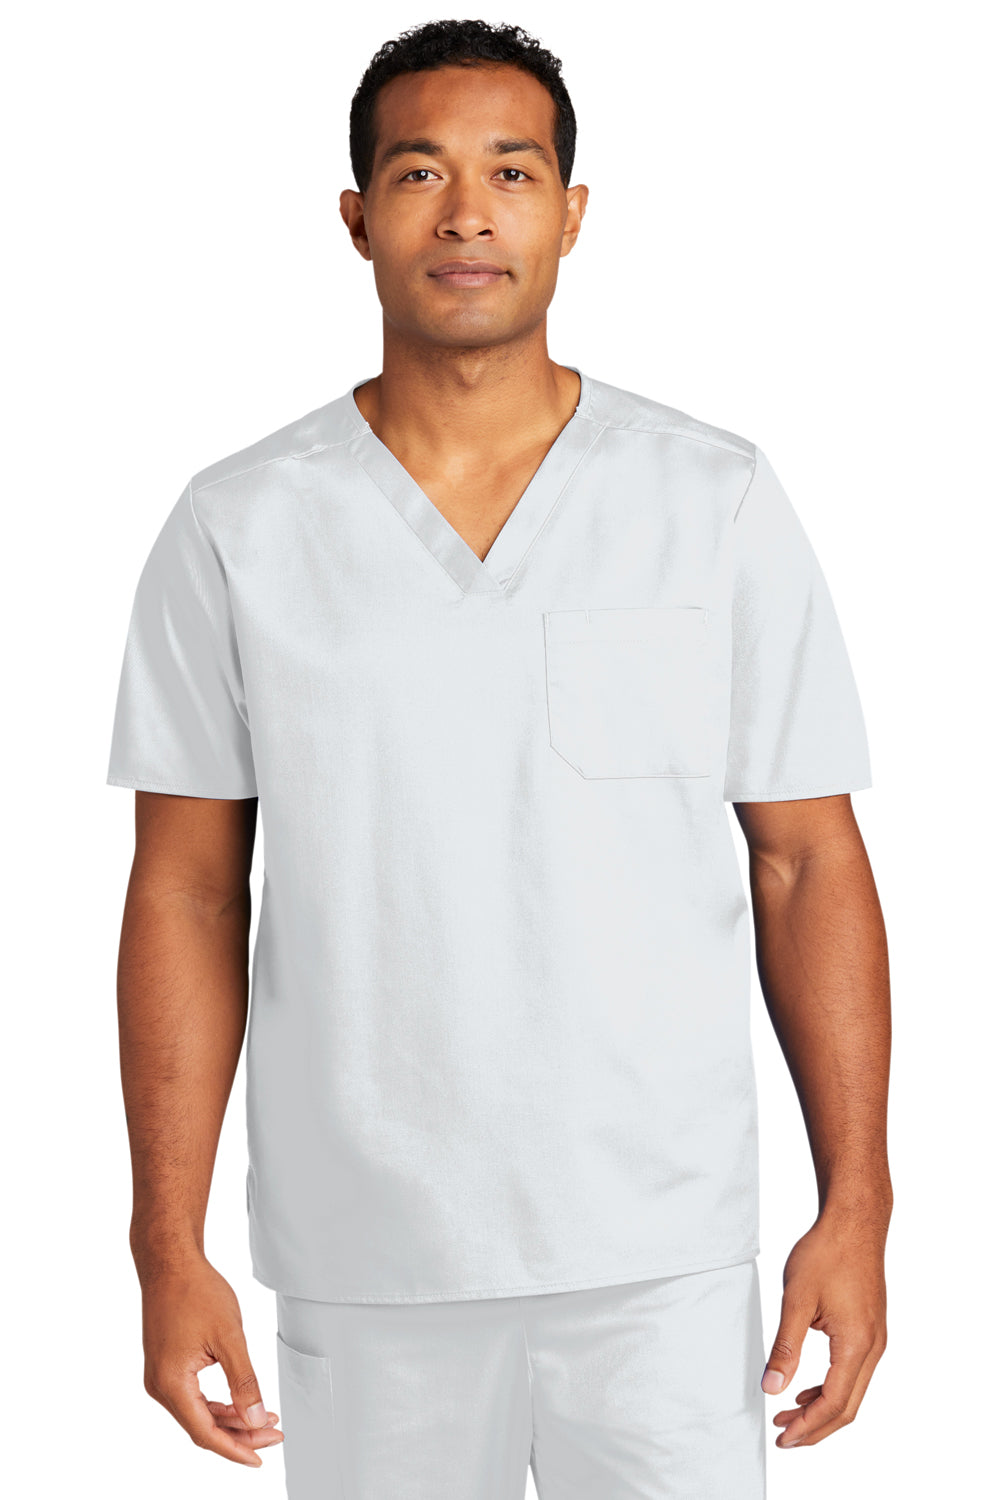 Wonderwink WW3160 WorkFlex Short Sleeve V-Neck Shirt w/ Pocket White Front